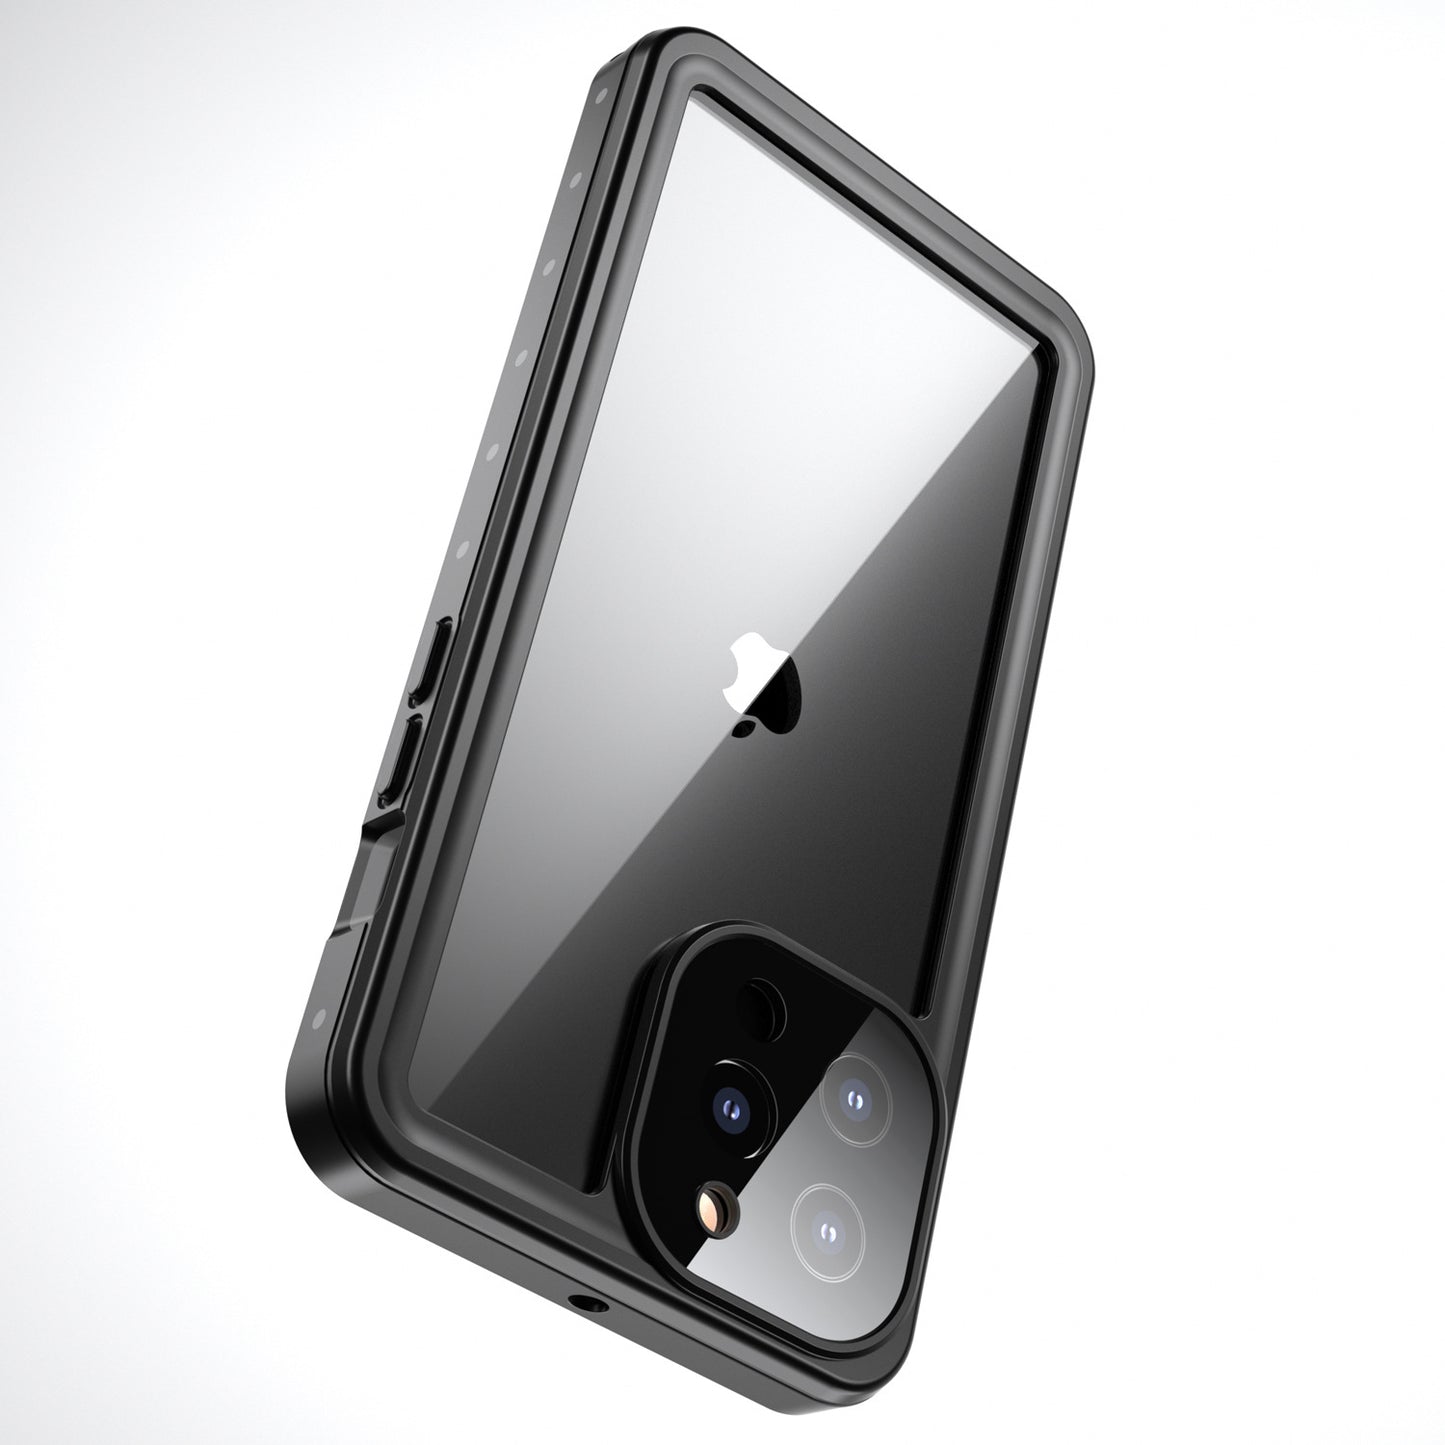 iPhone 7 / iphone 8  Plus Redpepper Waterproof, Dust-Proof Protective Case